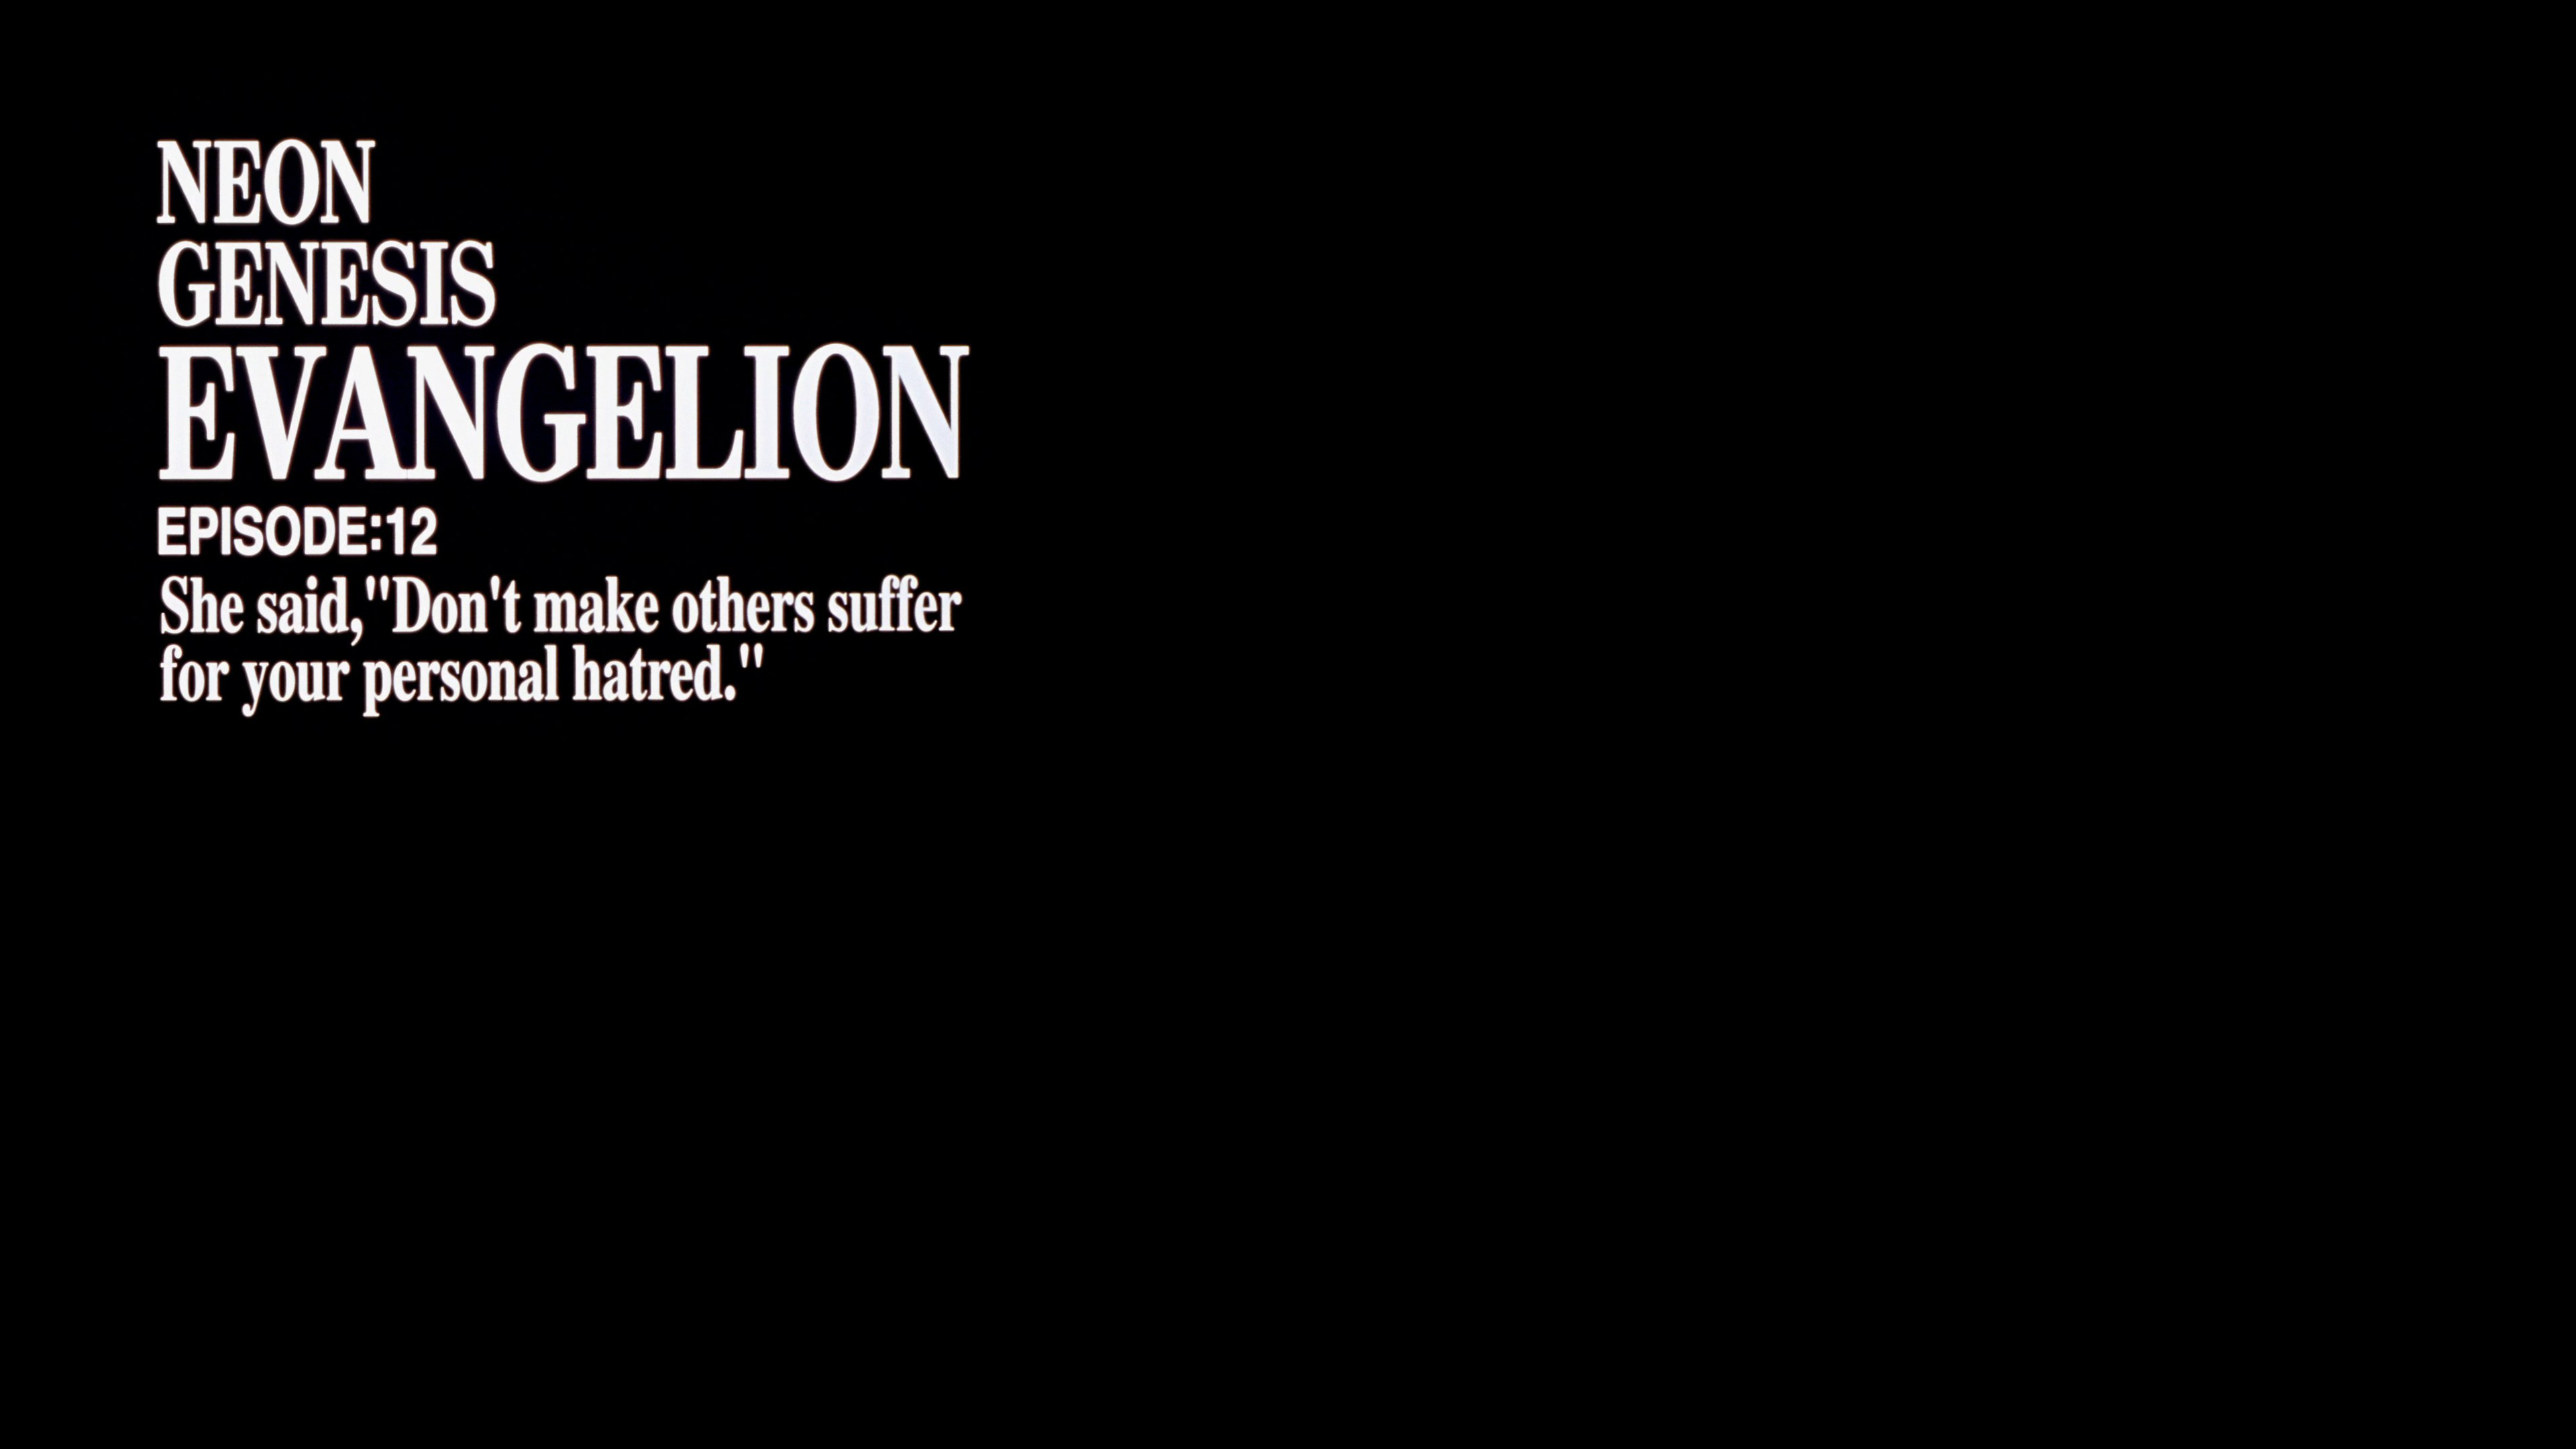 Anime 3840x2160 Neon Genesis Evangelion anime Anime screenshot black background simple background text white text minimalism